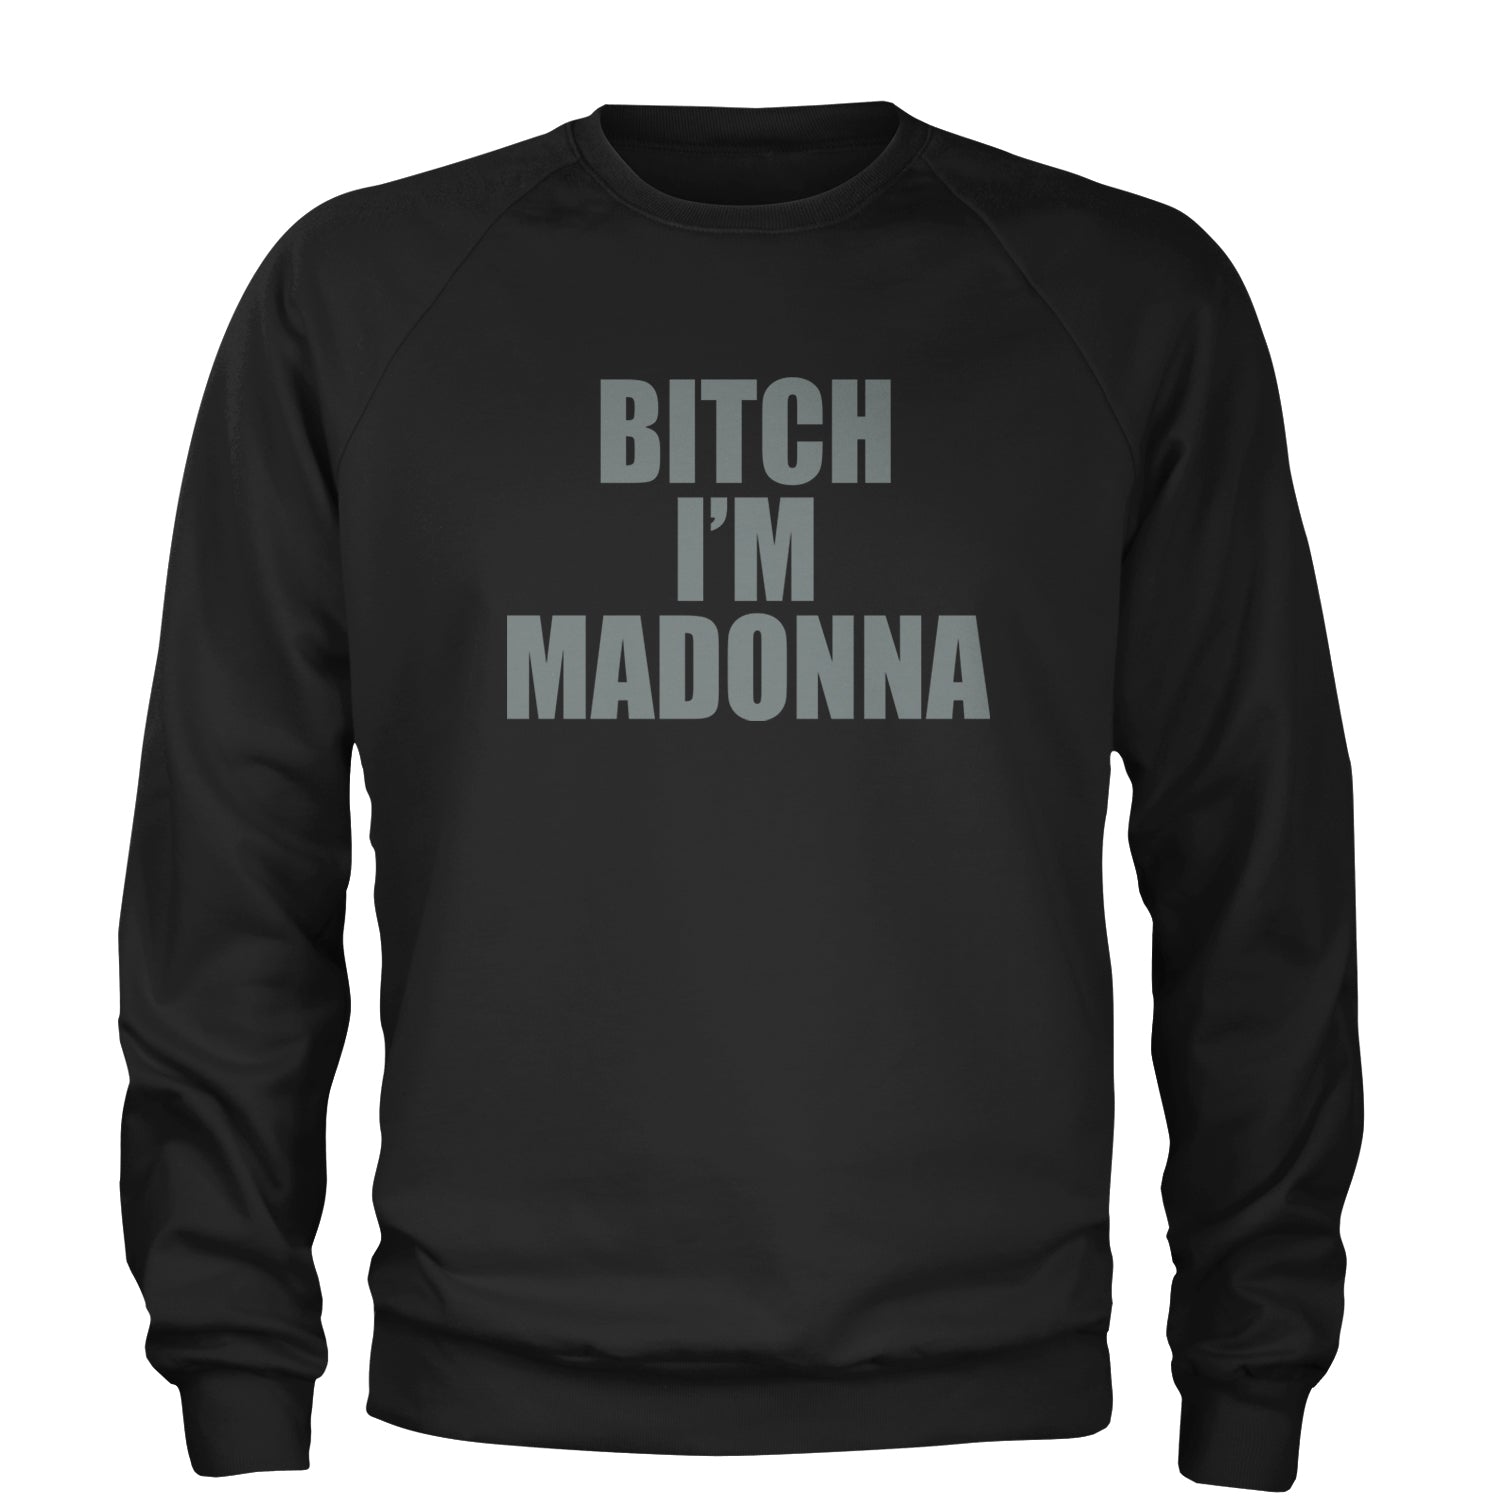 B-tch I'm Madonna Celebration Adult Crewneck Sweatshirt